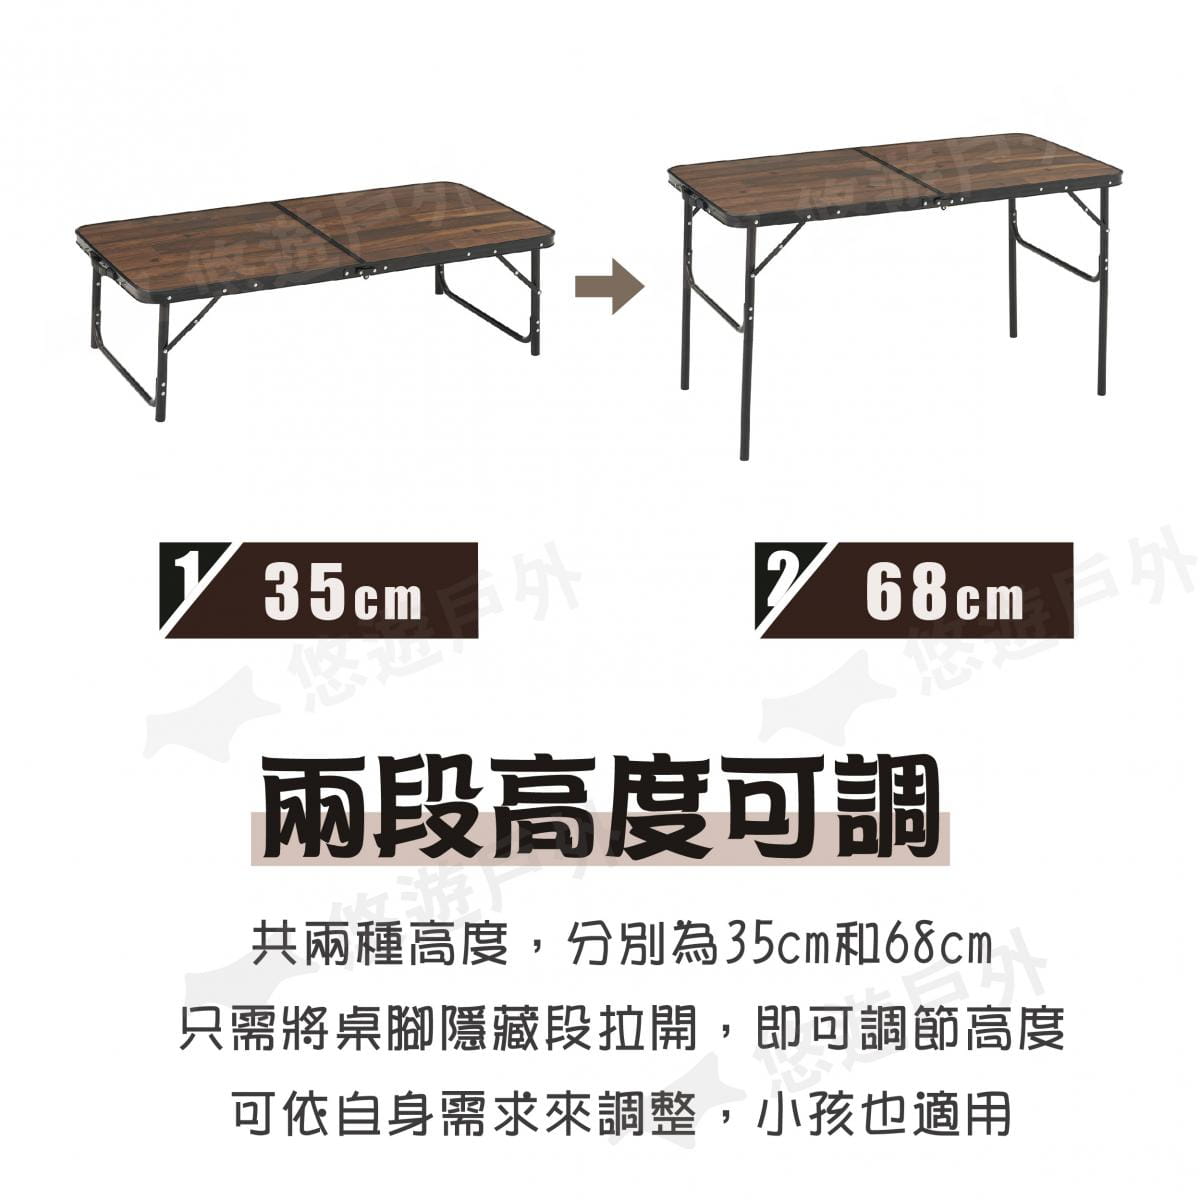 【日本LOGOS】仿枕木紋折合桌9060-LG73188042 2